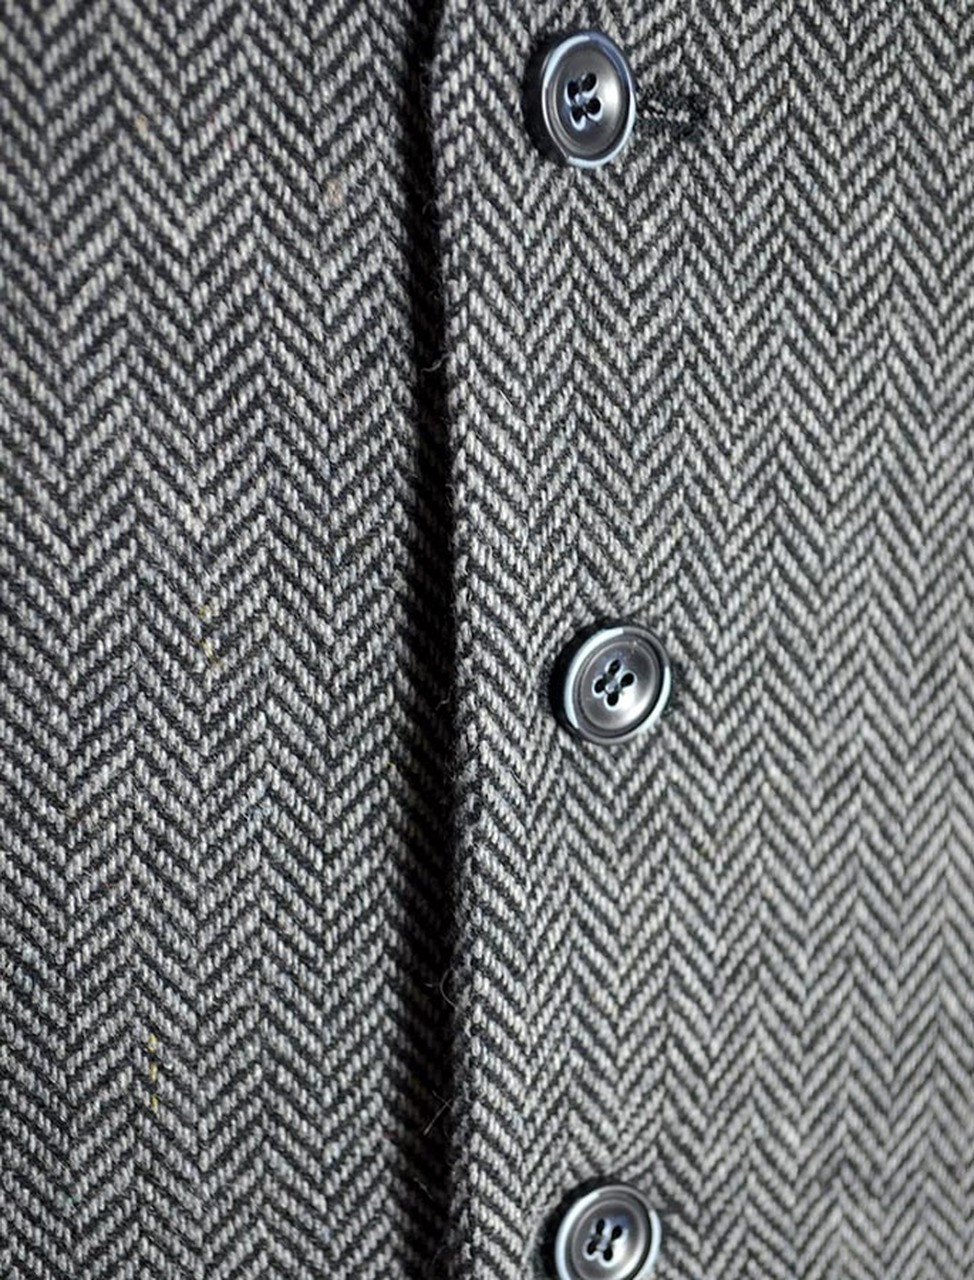 Tweed Herringbone Waistcoat - Grey